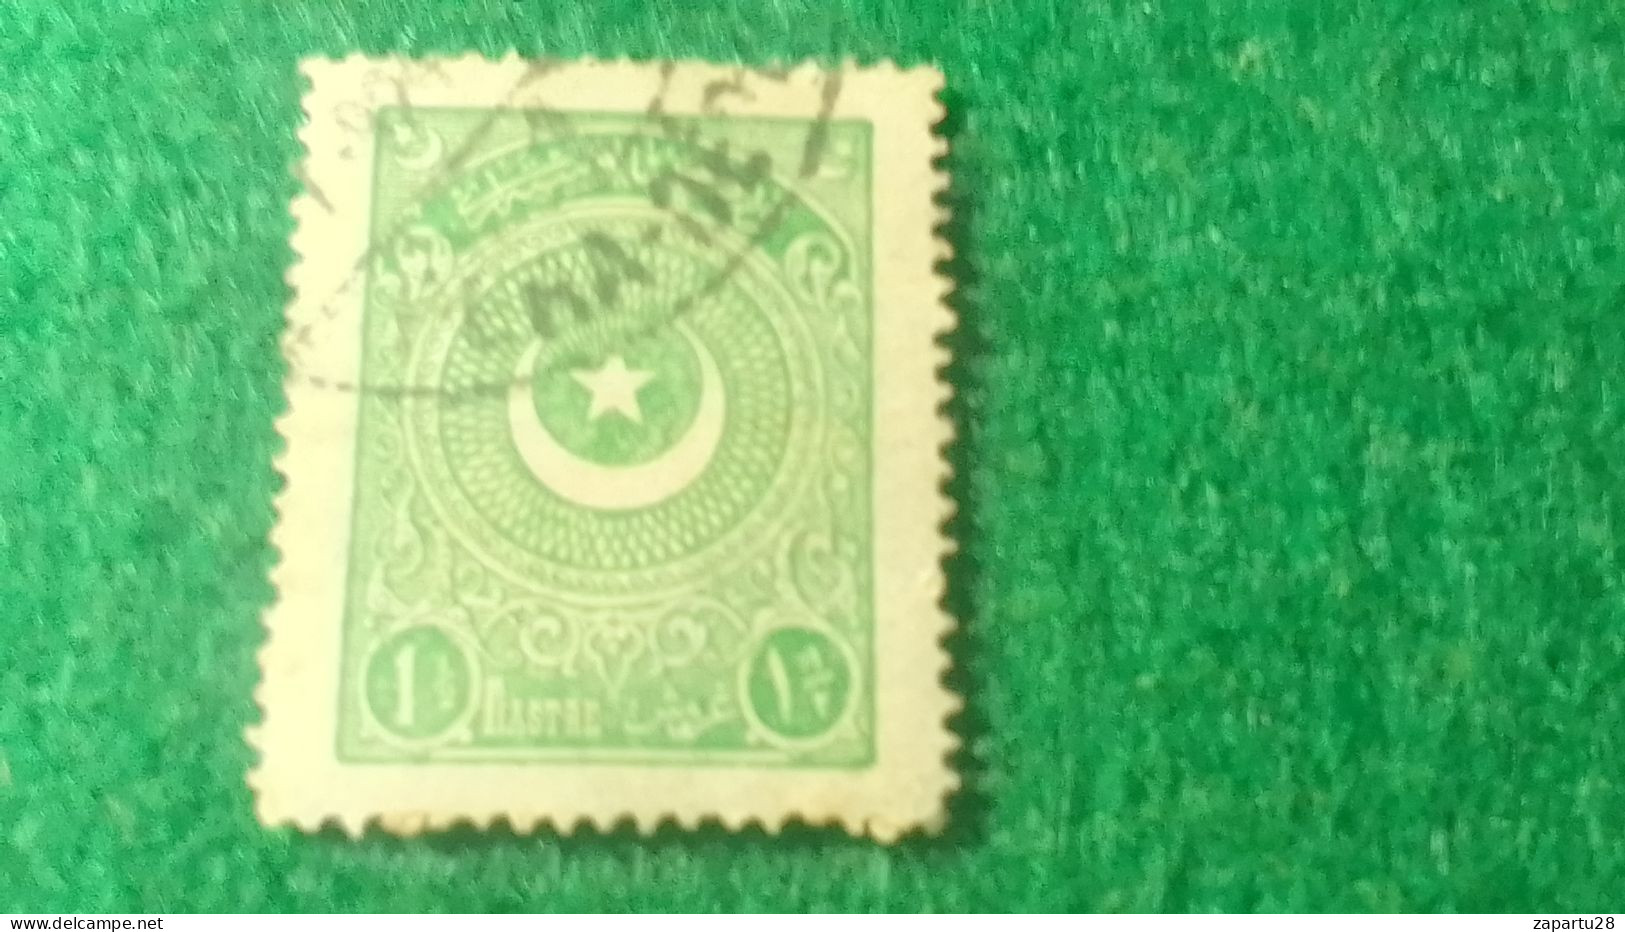 TÜRKİYE- 1922   AYYILDIZ     1.50    PİA    DAMGALI - Used Stamps